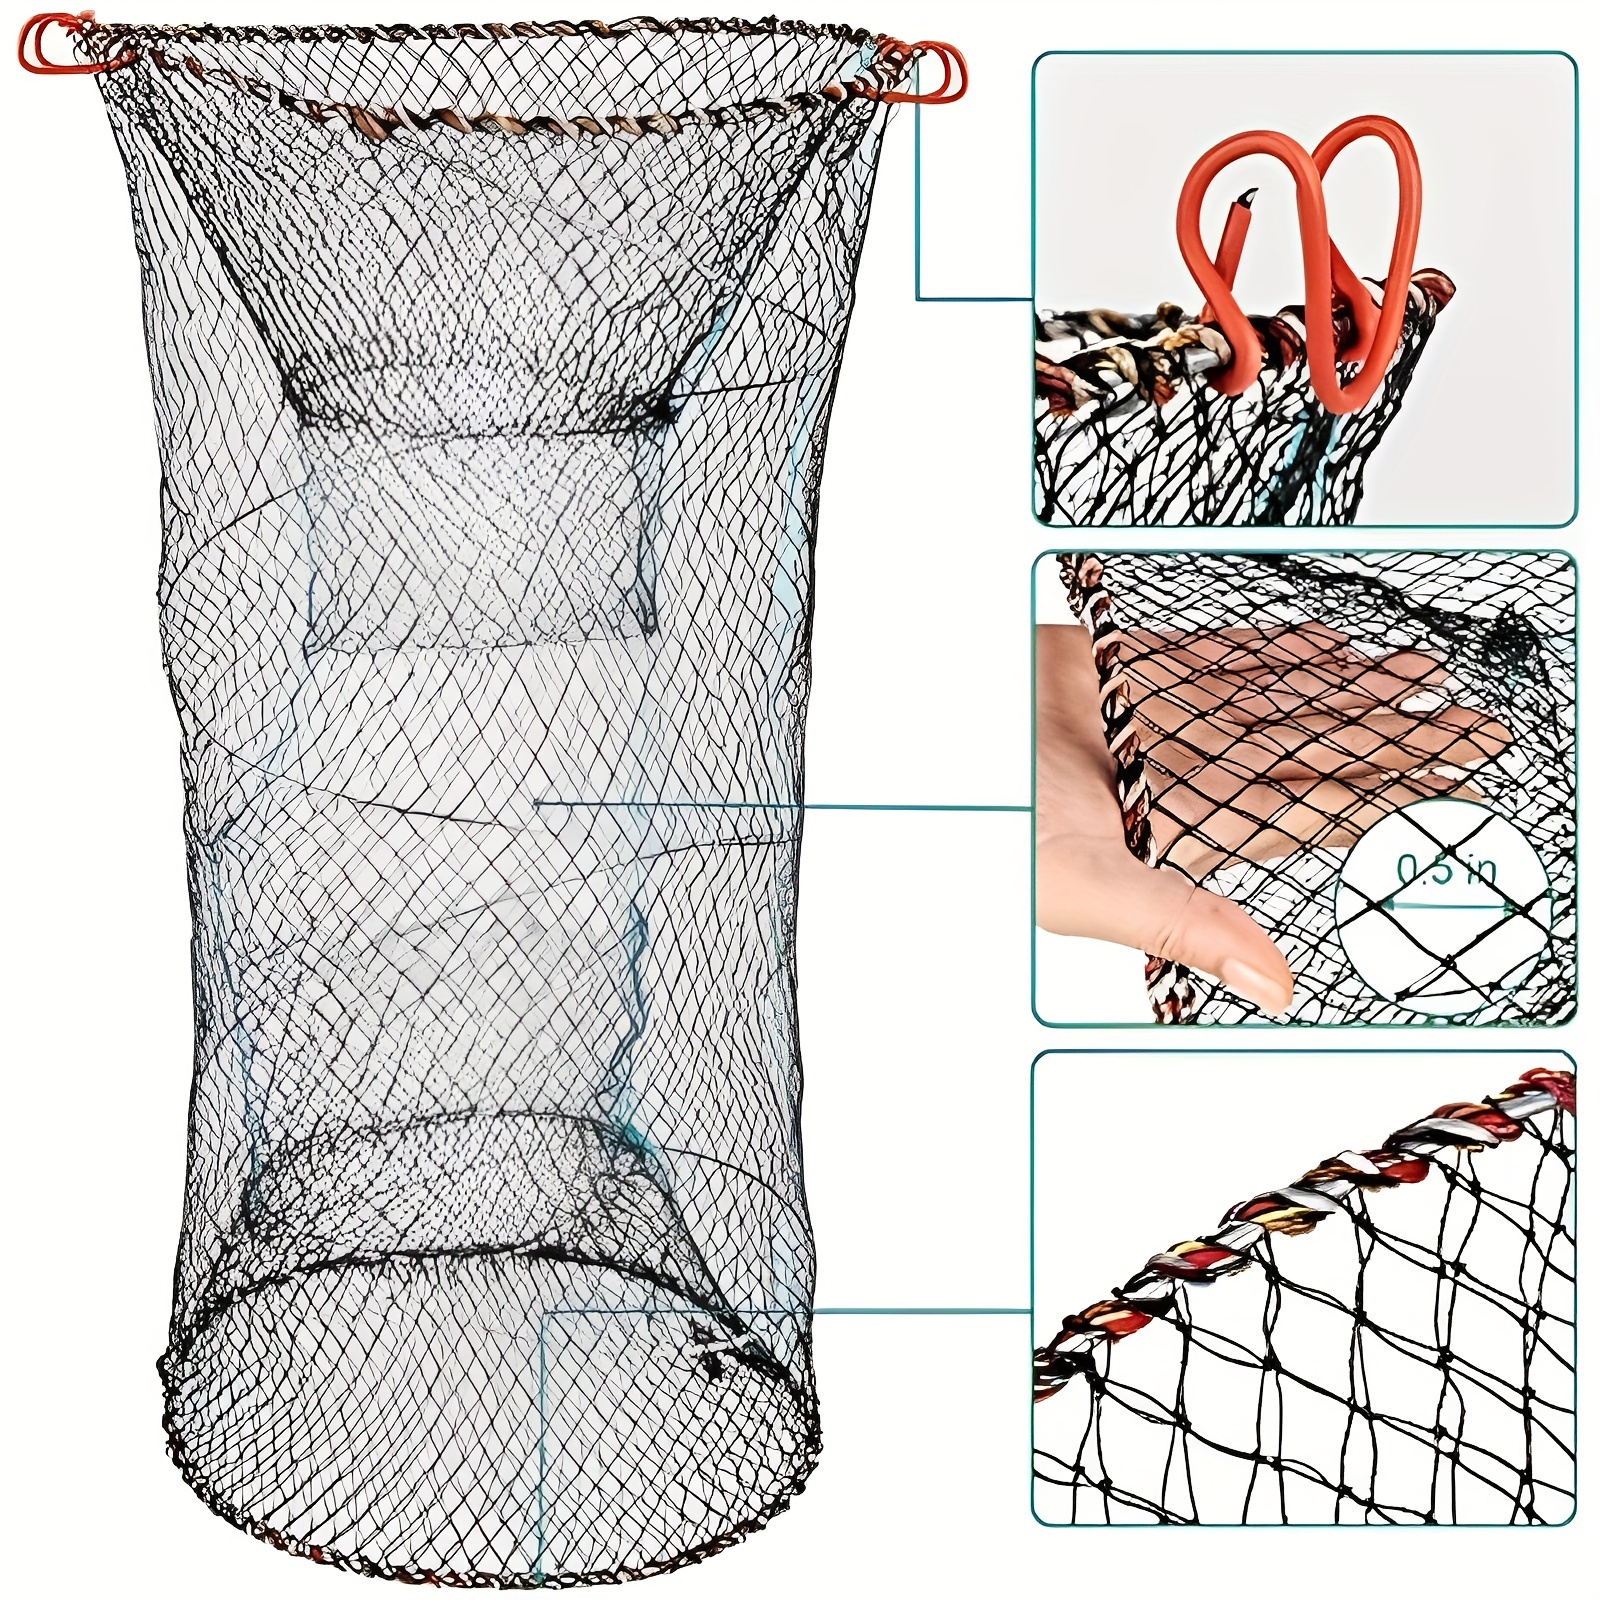  EASY BIG Foldable Bait Trap Fishing Net - Hand Cast